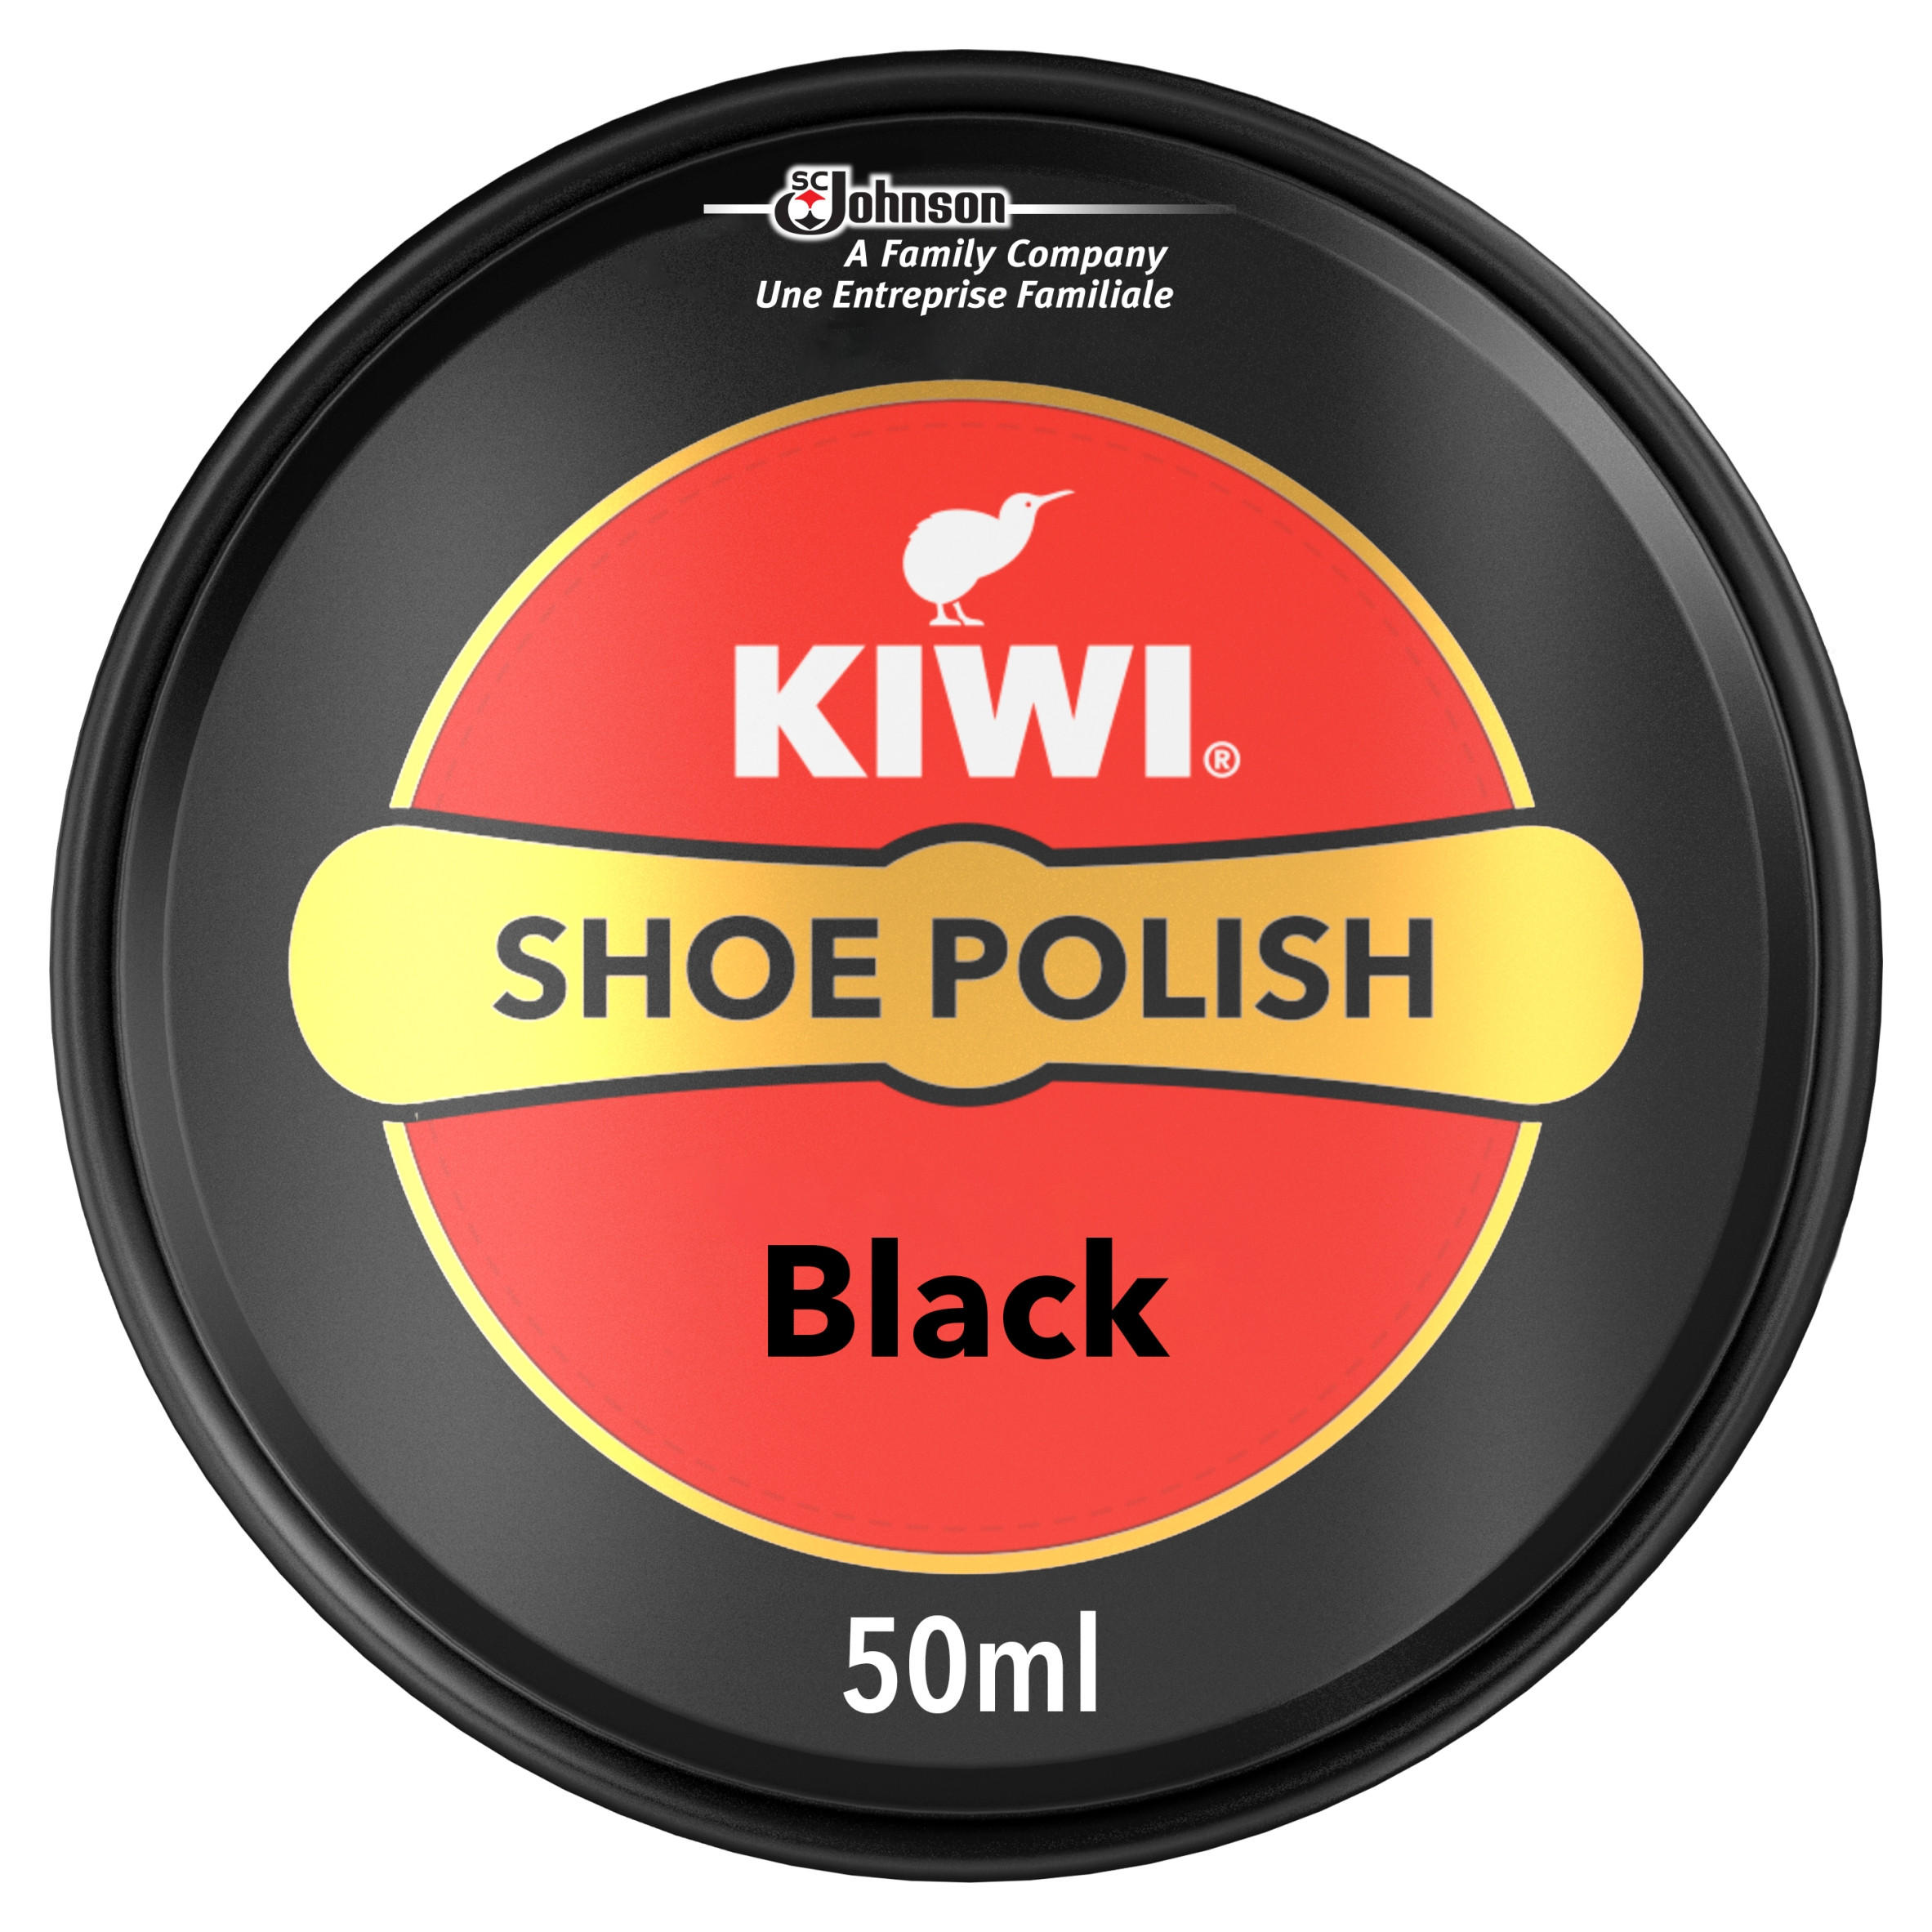 Kiwi Shoe Polish Tin Black 50ml | Home Accessories | Iceland Foods